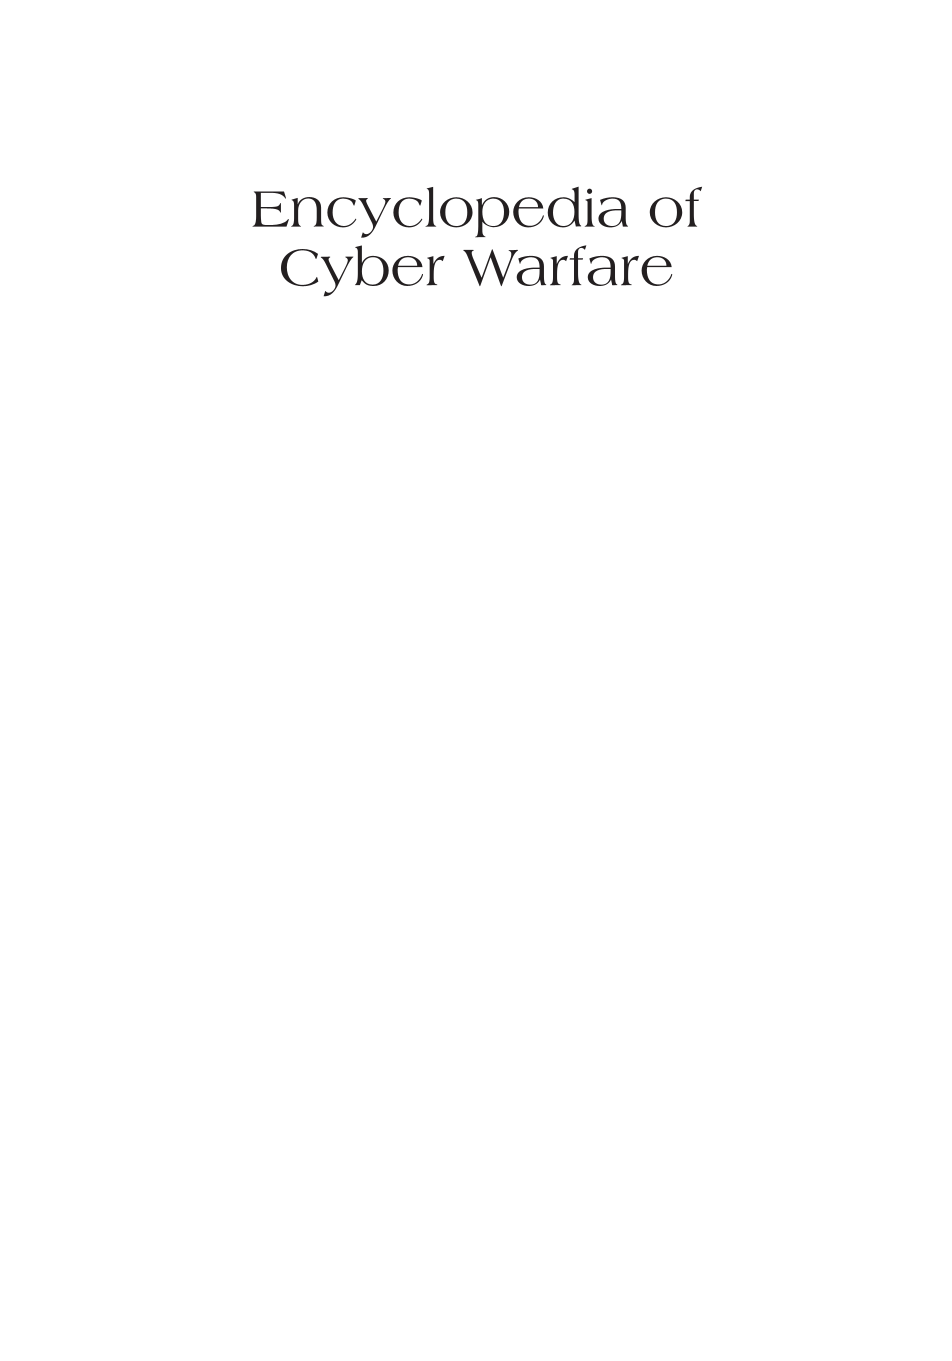 Encyclopedia of Cyber Warfare page i